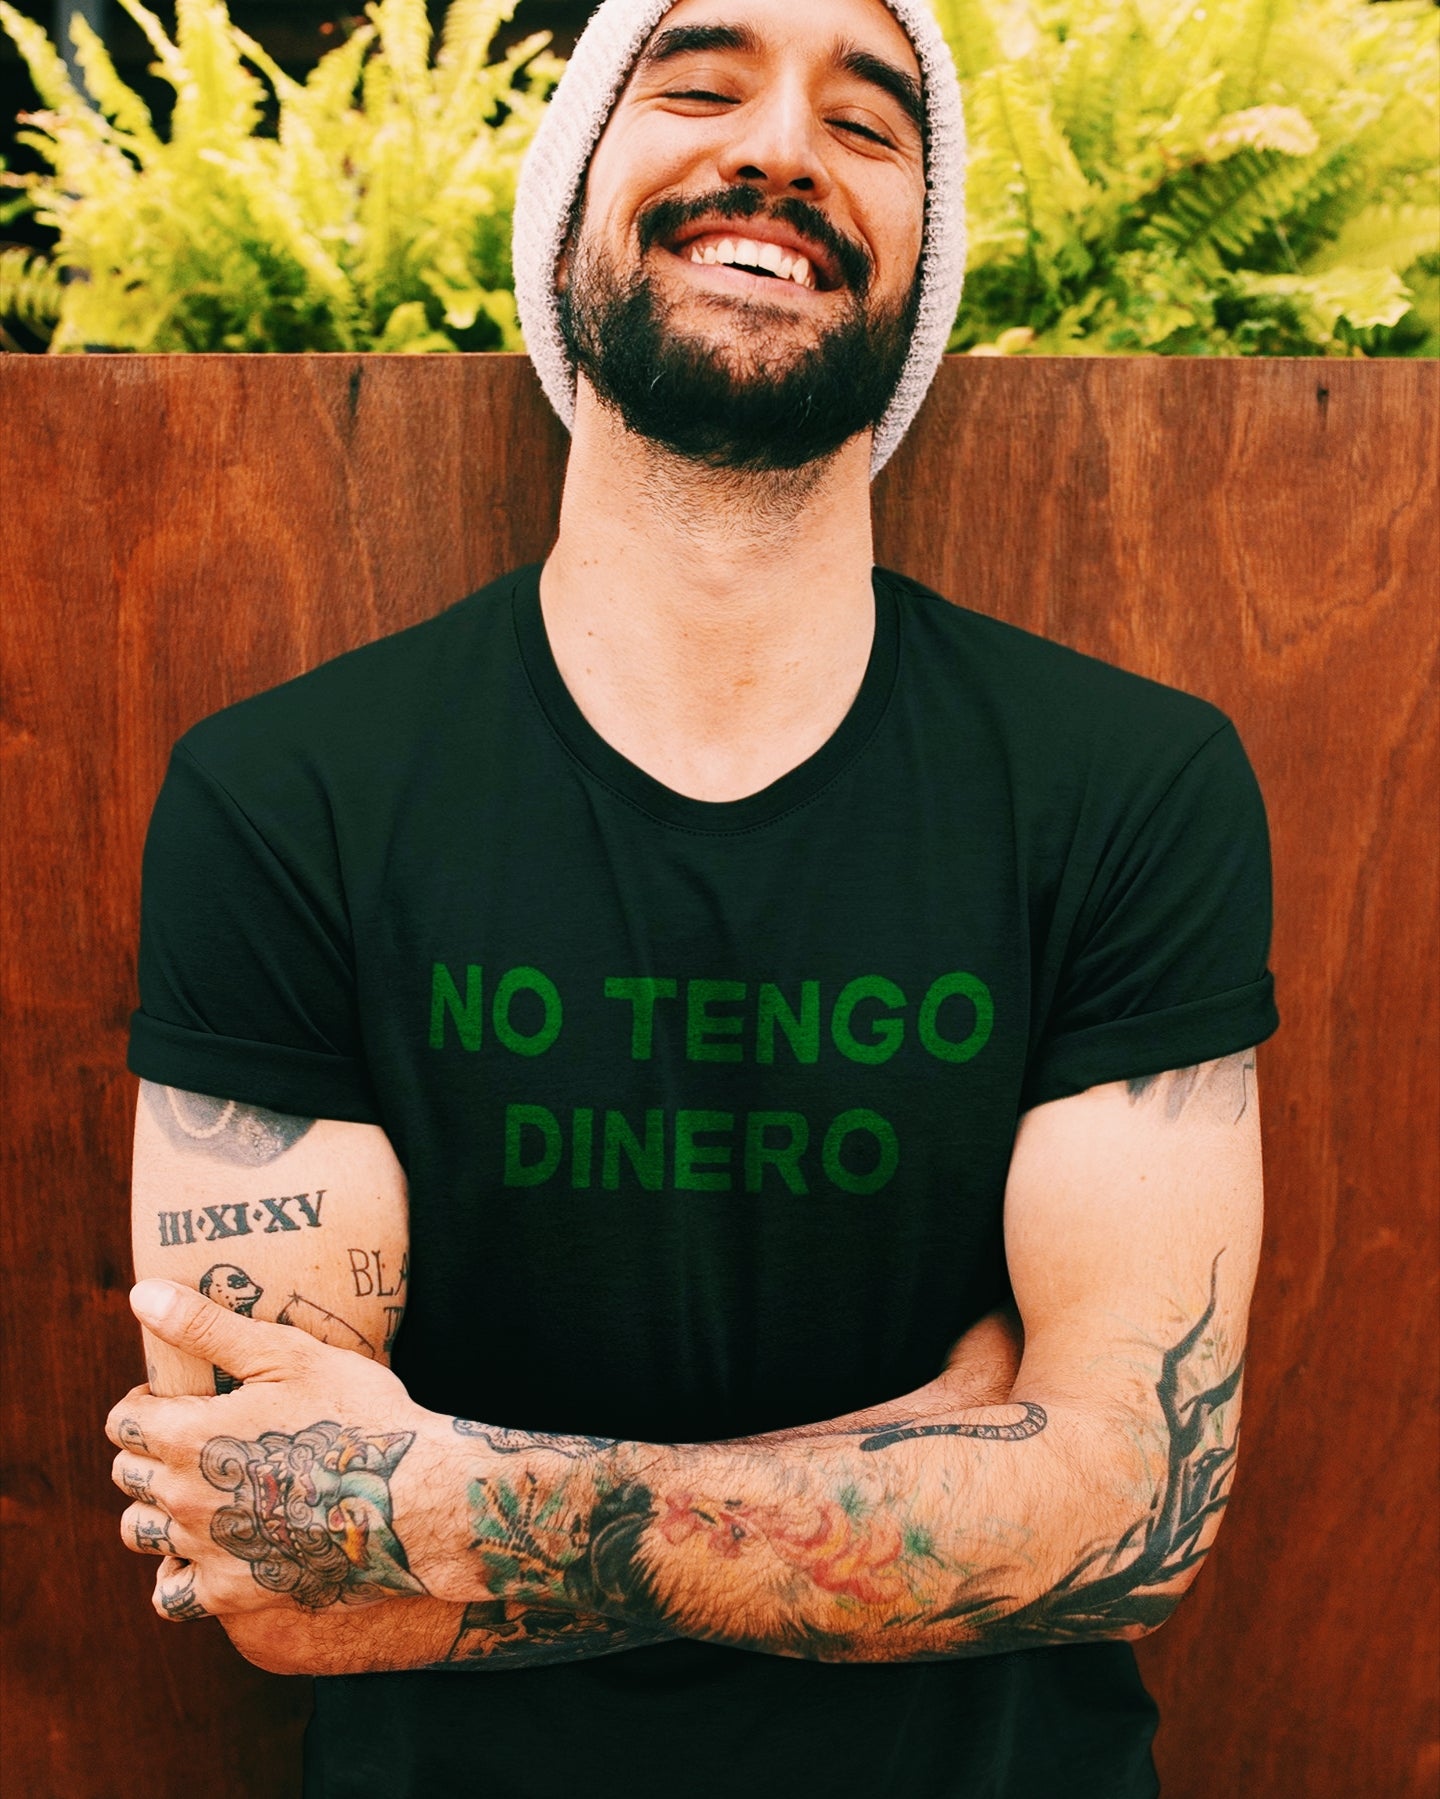 Latino man wearing Black t-shirt with green text reading 'no tengo dinero'